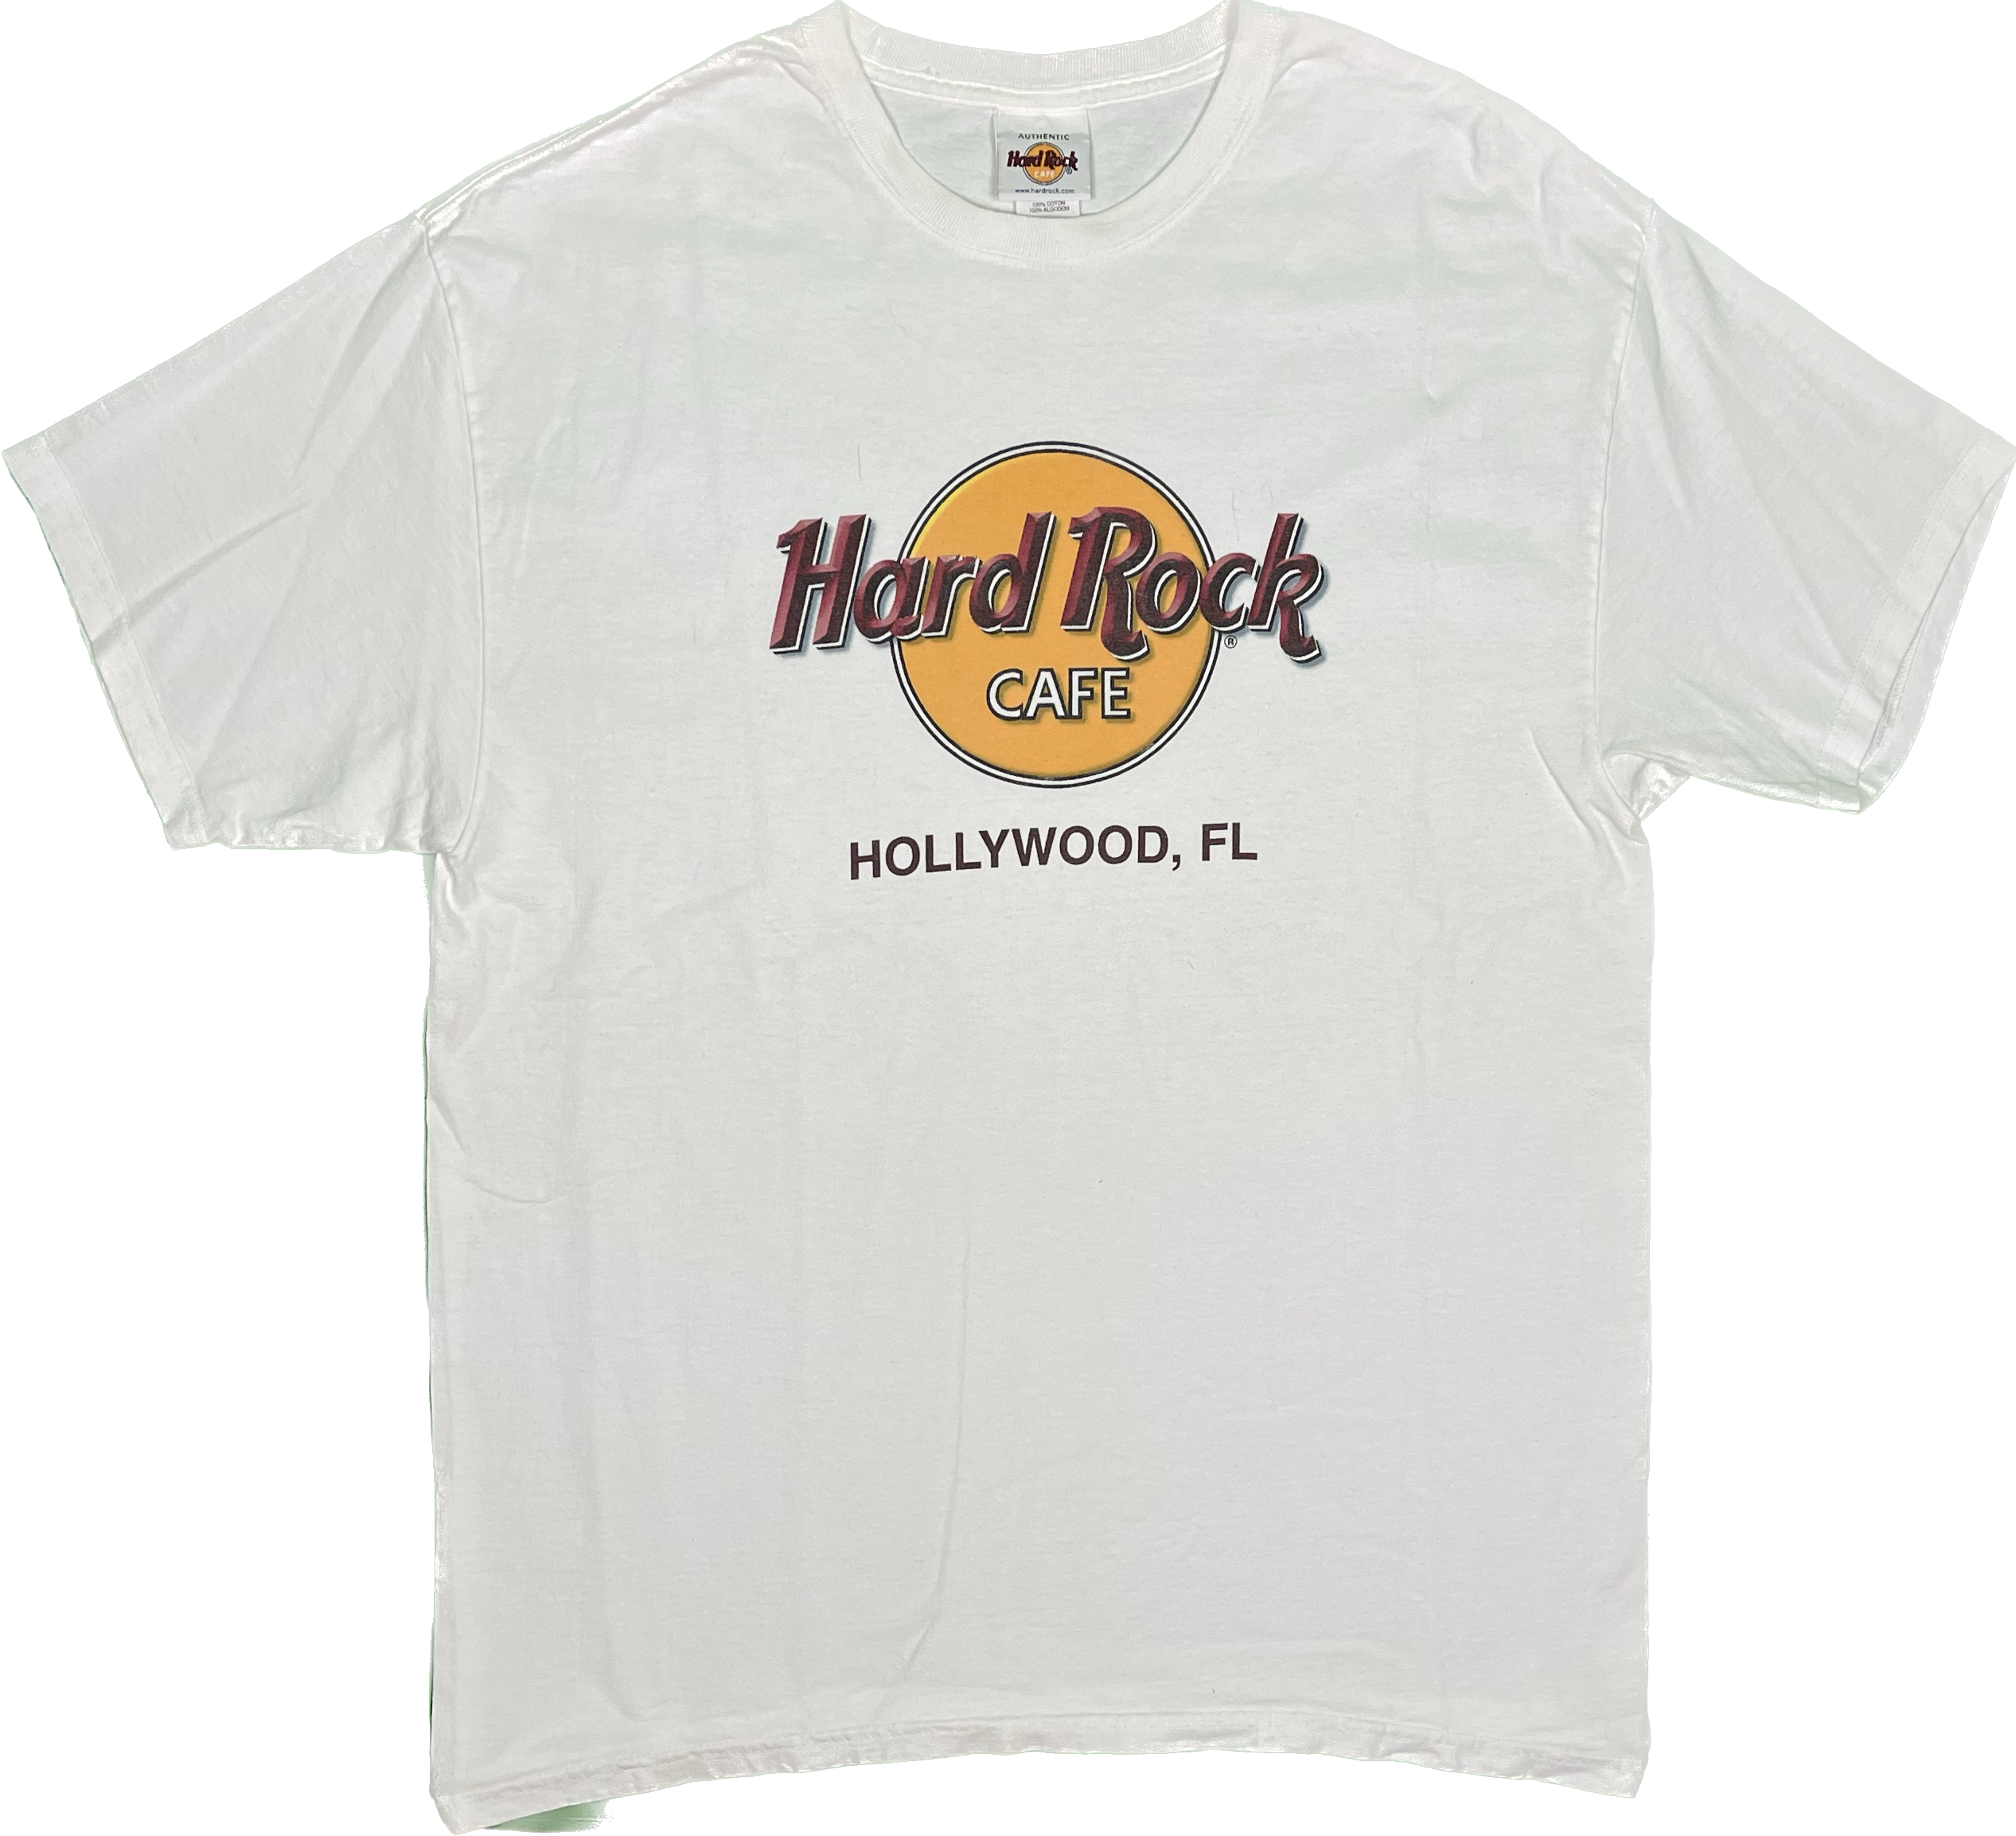 Hard Rock Cafe Hollywood, FL T-Shirt